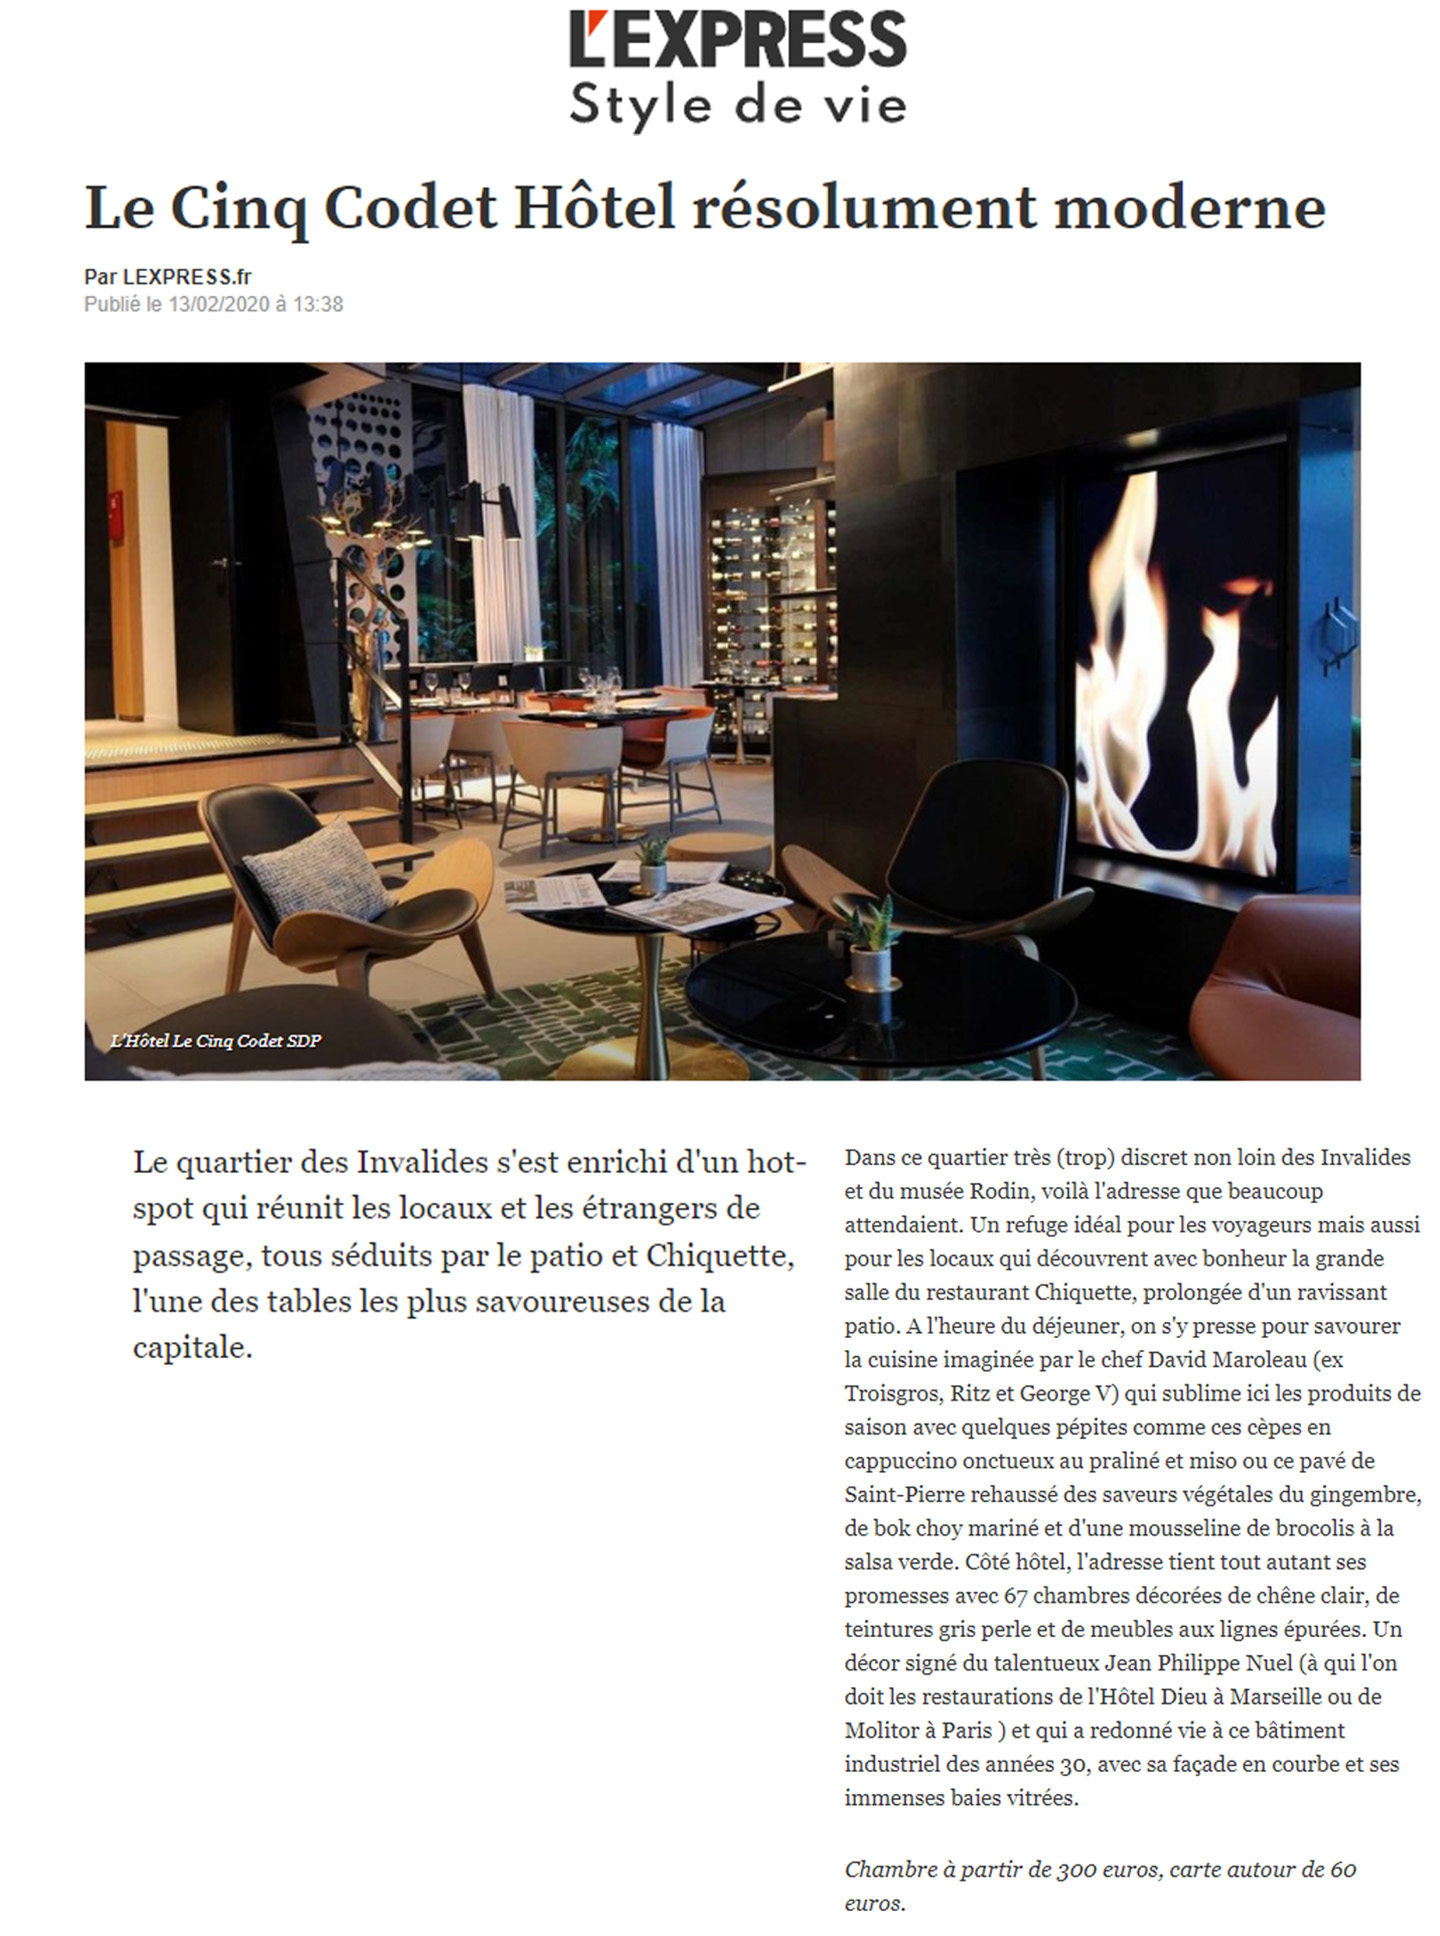 article on the parisian luxury hotel le cinq codet designed by the interior design studio jean-philippe nuel